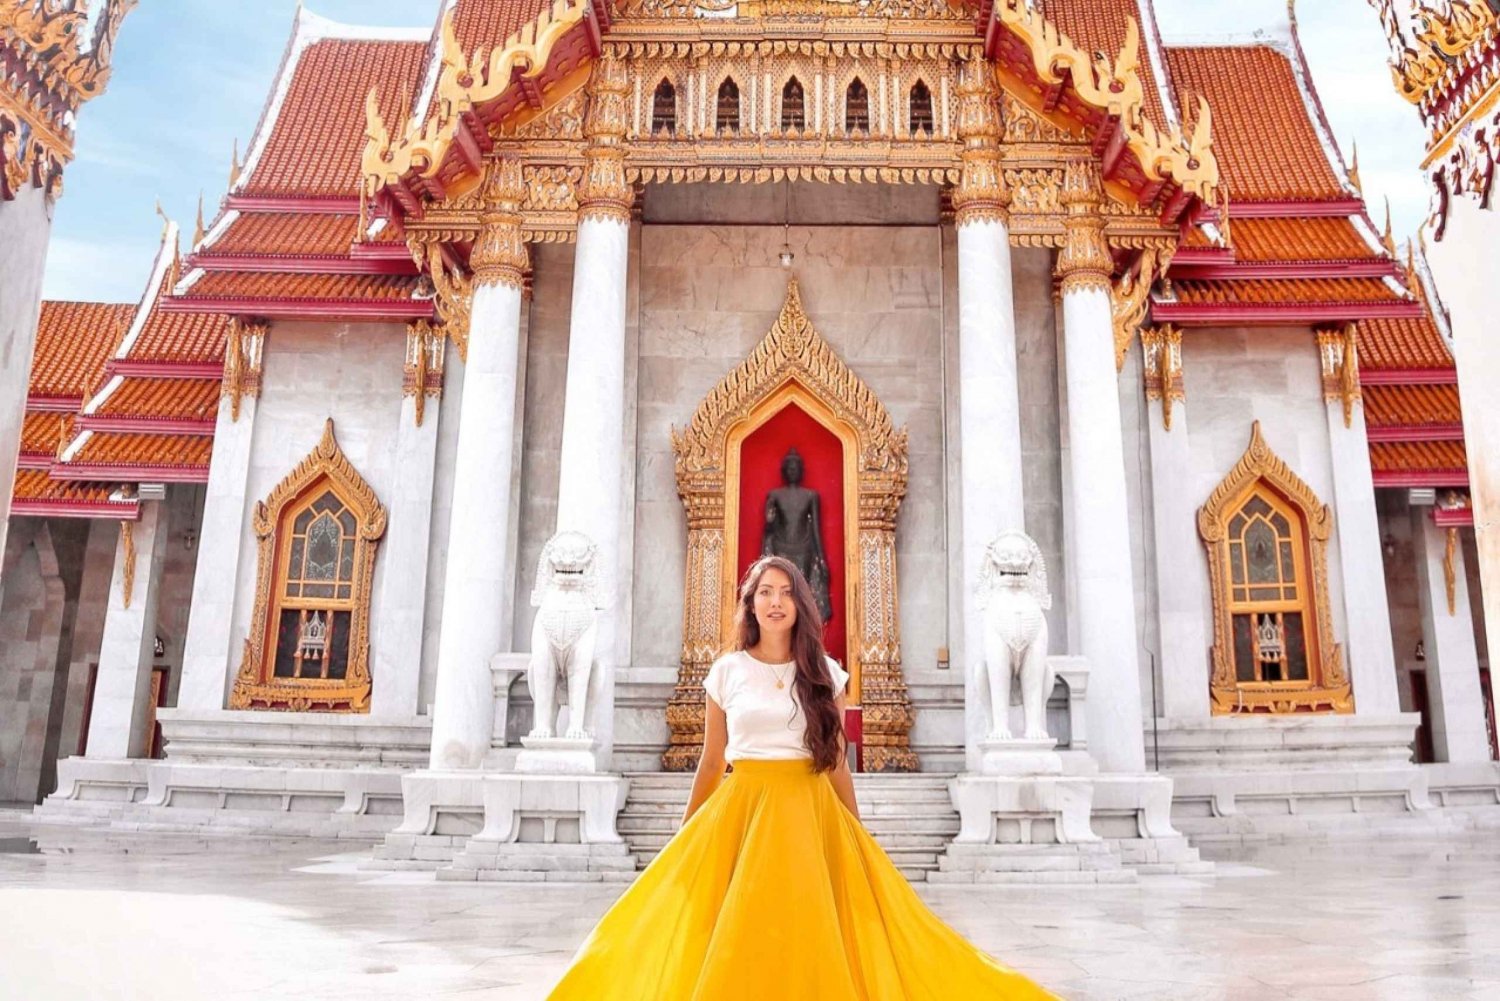 Bangkok Instagram Tour (Private & All-Inclusive)